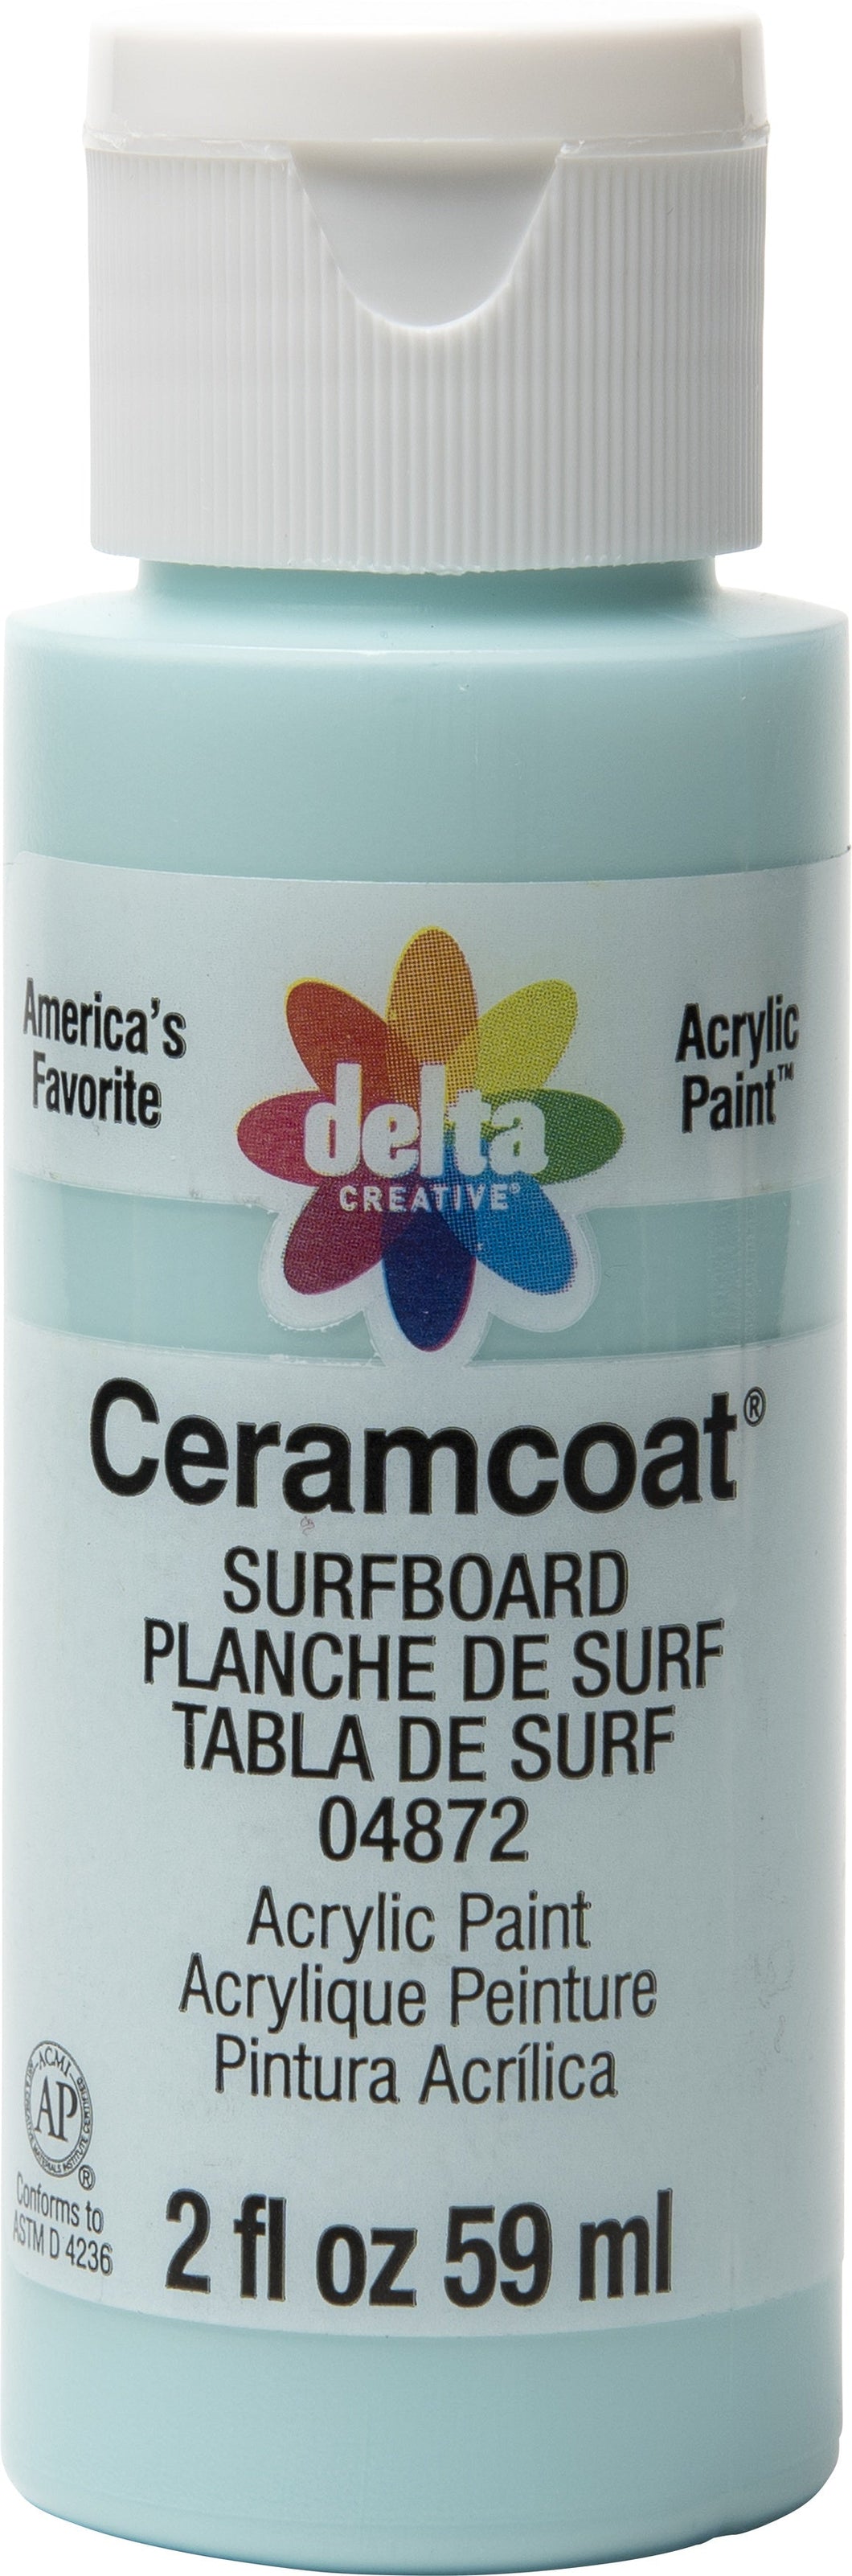 CERAMCOAT Acrylic Paint 59ml 2floz  - Surfboard